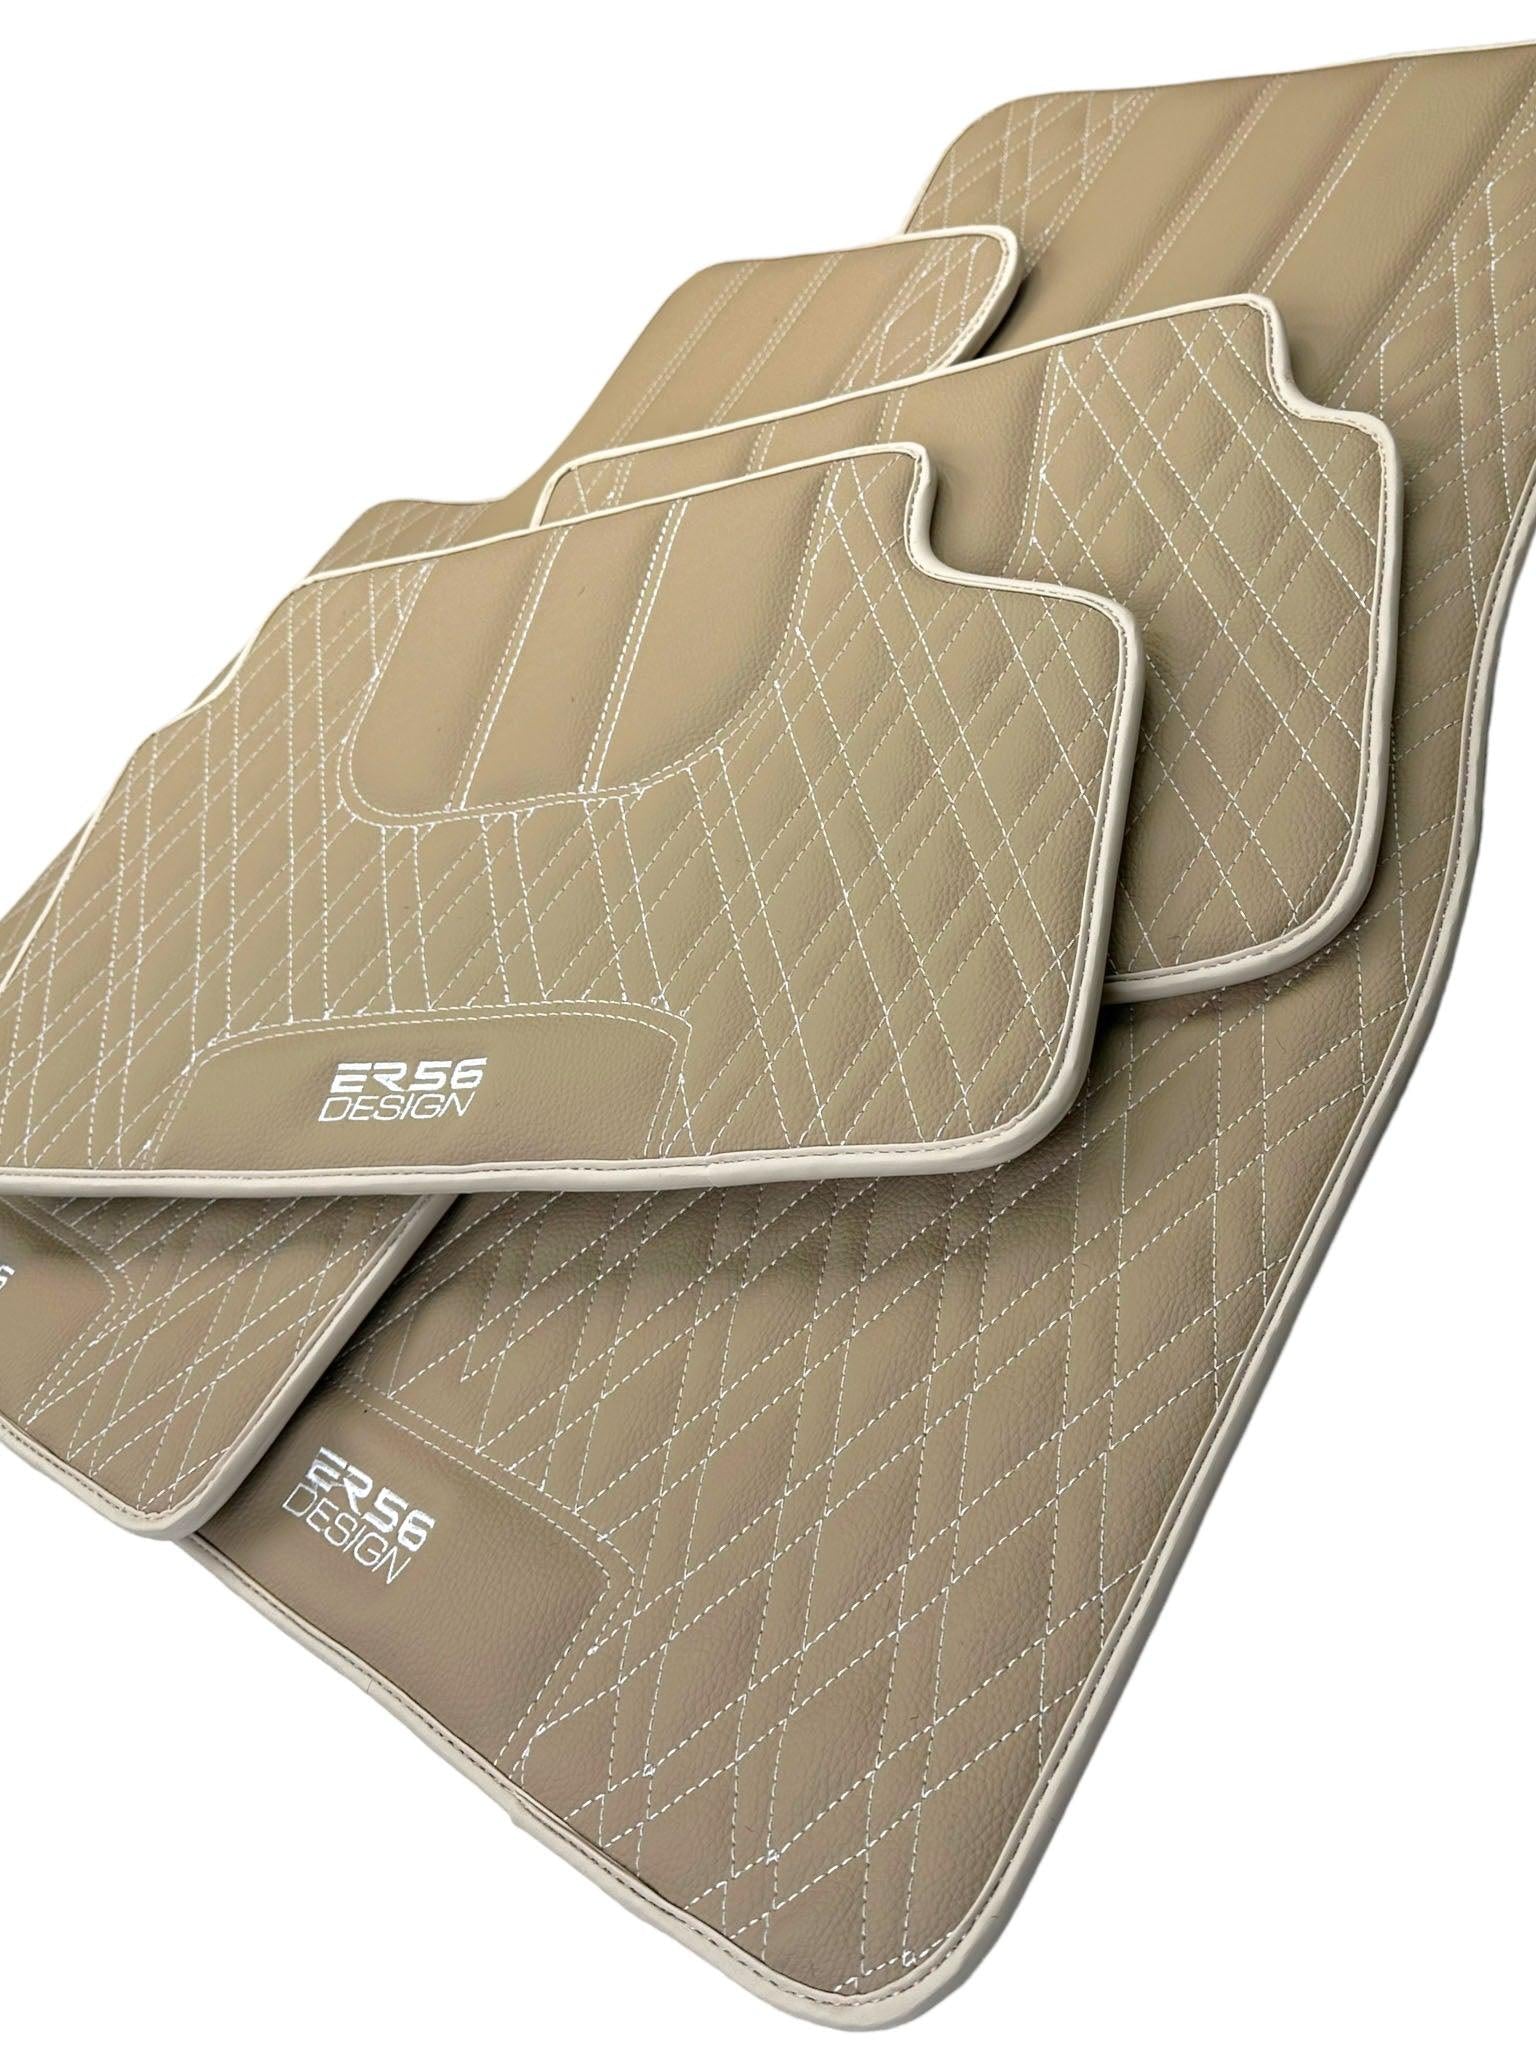 Beige Leather Floor Floor Mats For BMW 1 Series F40 | Fighter Jet Edition Autowin Brand |Sky Blue Trim